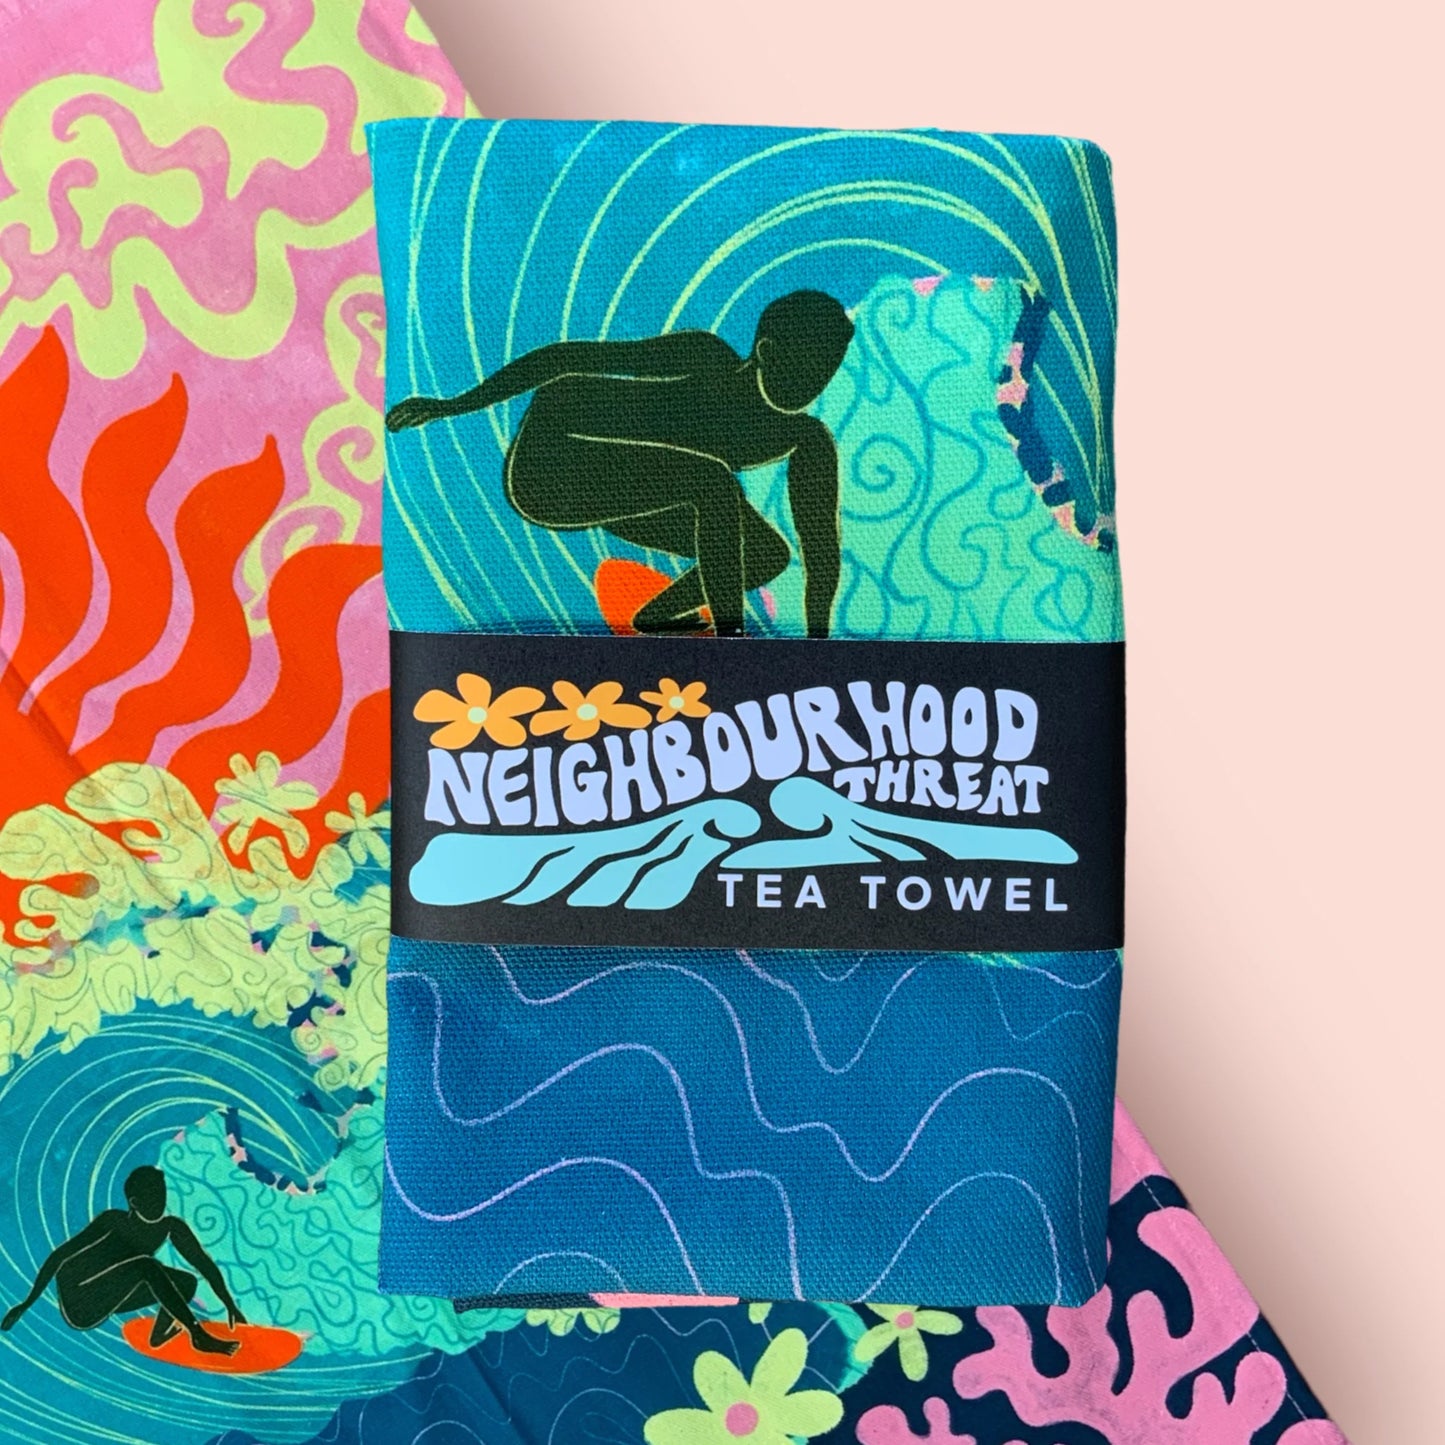 The Neighbourhood Threat Tea Towel - The Longest Wave